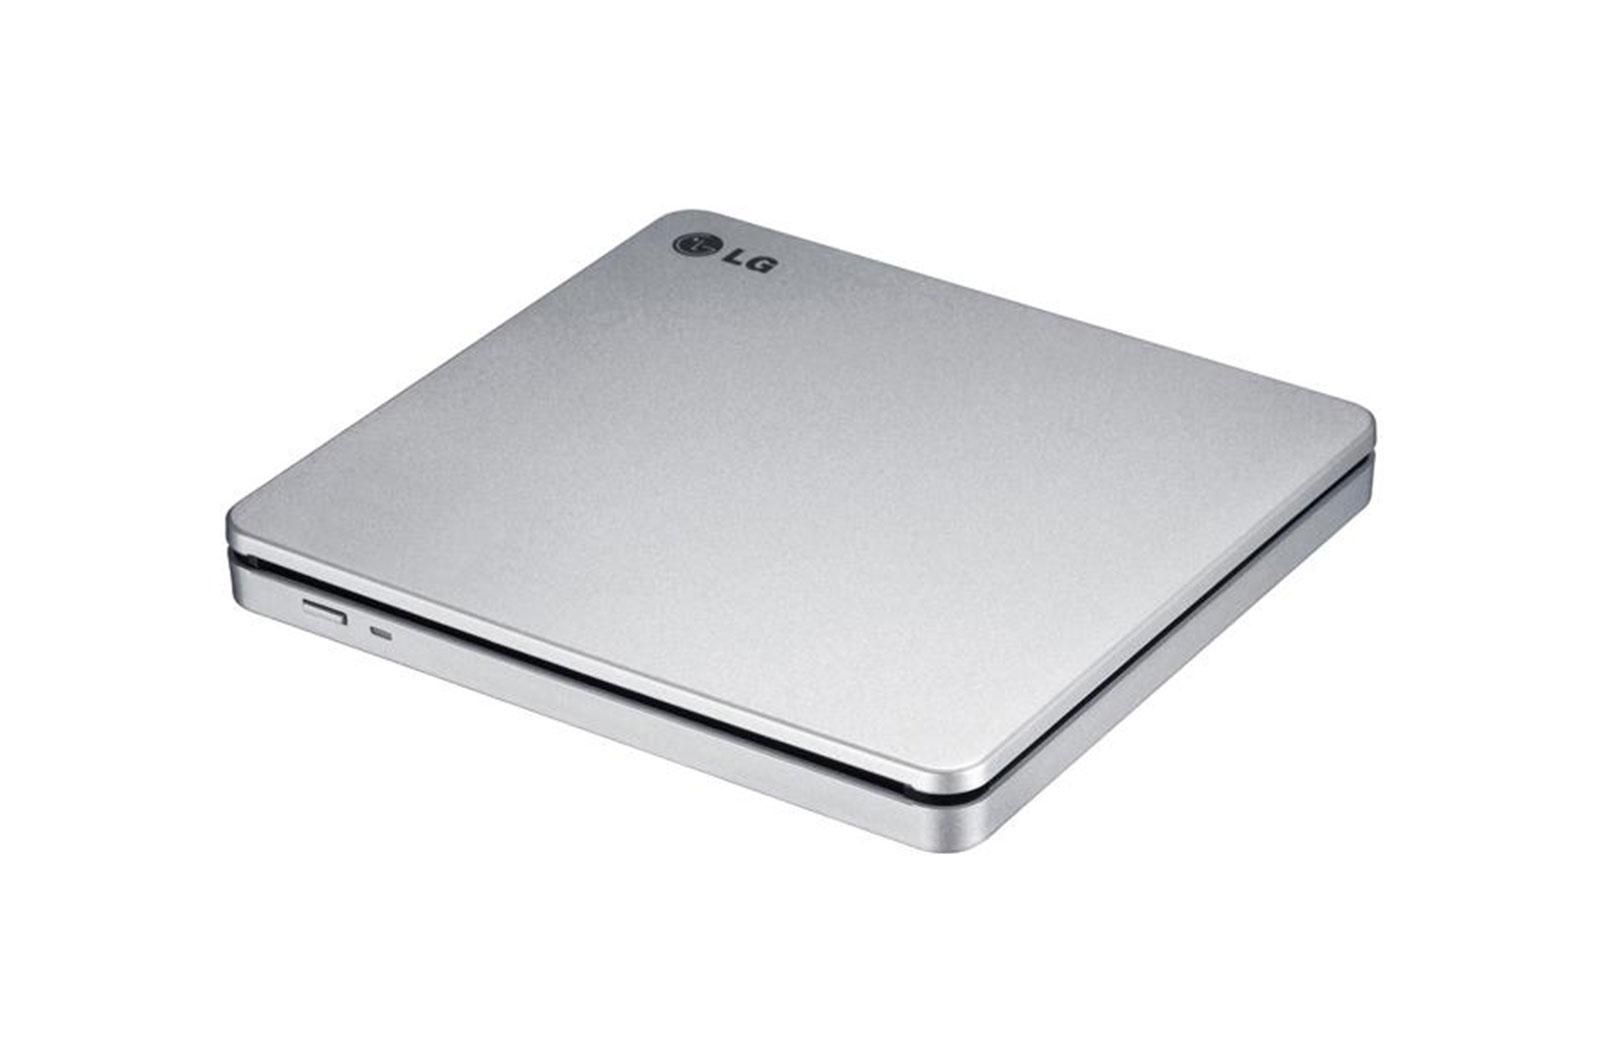 Ultra Slim Portable DVD-R Silver Hitachi-LG GP60NS6, GP60NS60 Series, DVD Write /Read Speed: 8x, CD Write/Read Speed: 24x, USB 2.0, Buffer 0.75MB, 144 mm x 137.5 mm x 14 mm._3